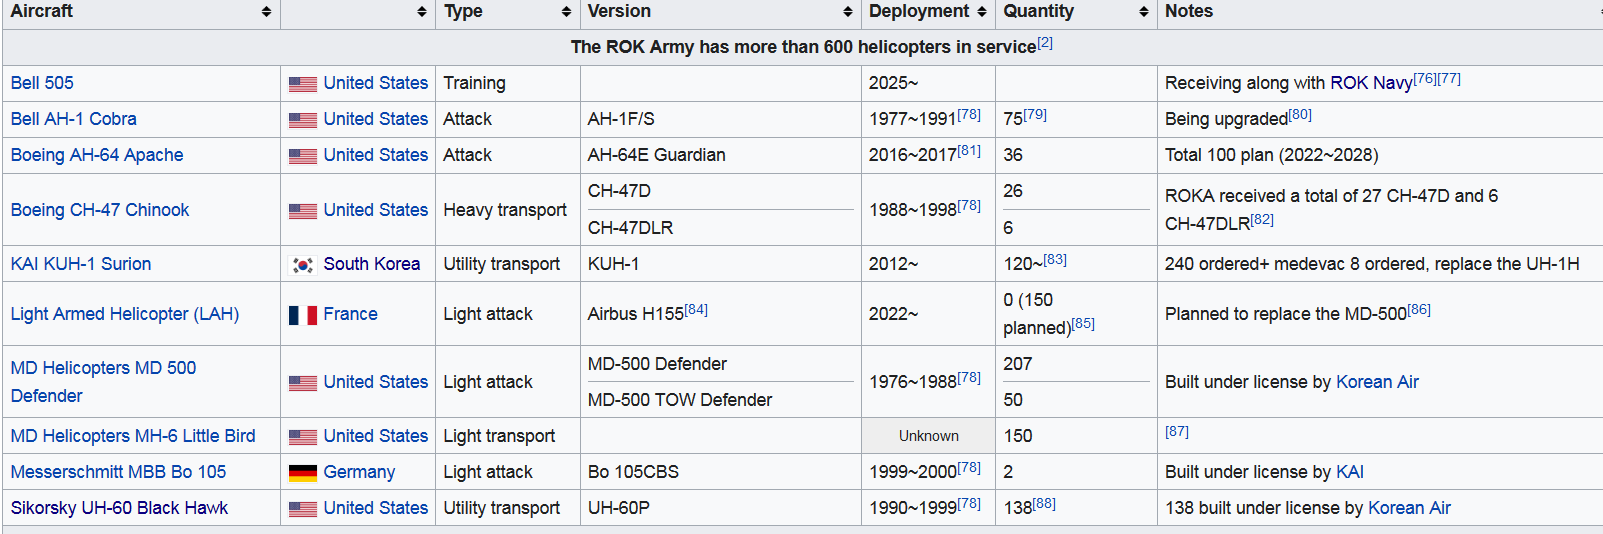 Screenshot_2022-08-05 List of equipment of the Republic of Korea Army - Wikipedia.png